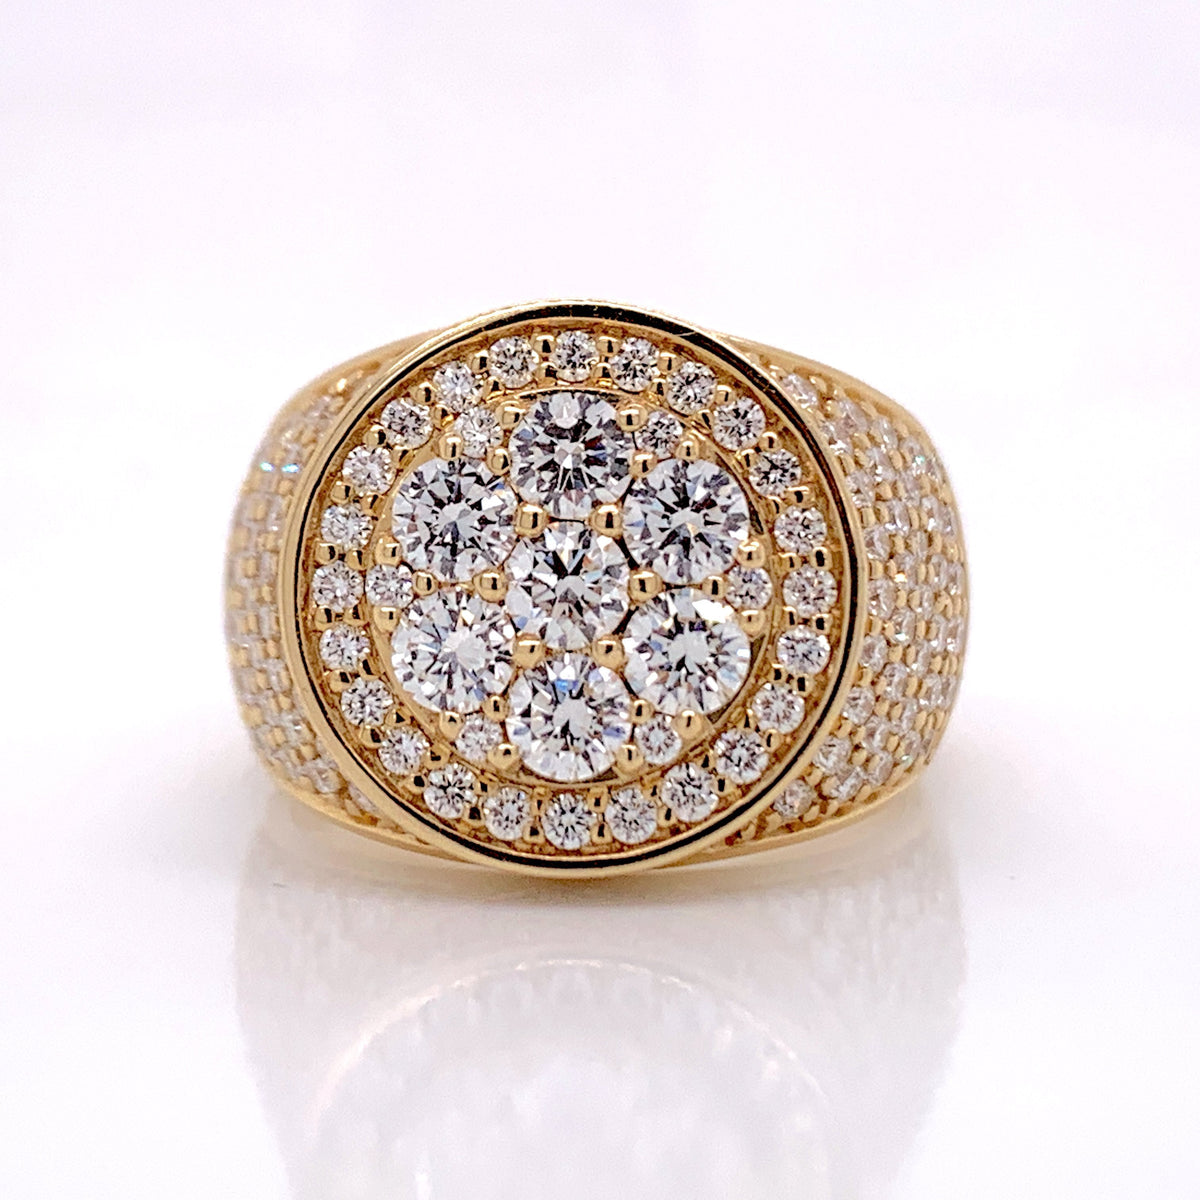 3.50 CT. Diamond Ring in 10K Gold - White Carat Diamonds 